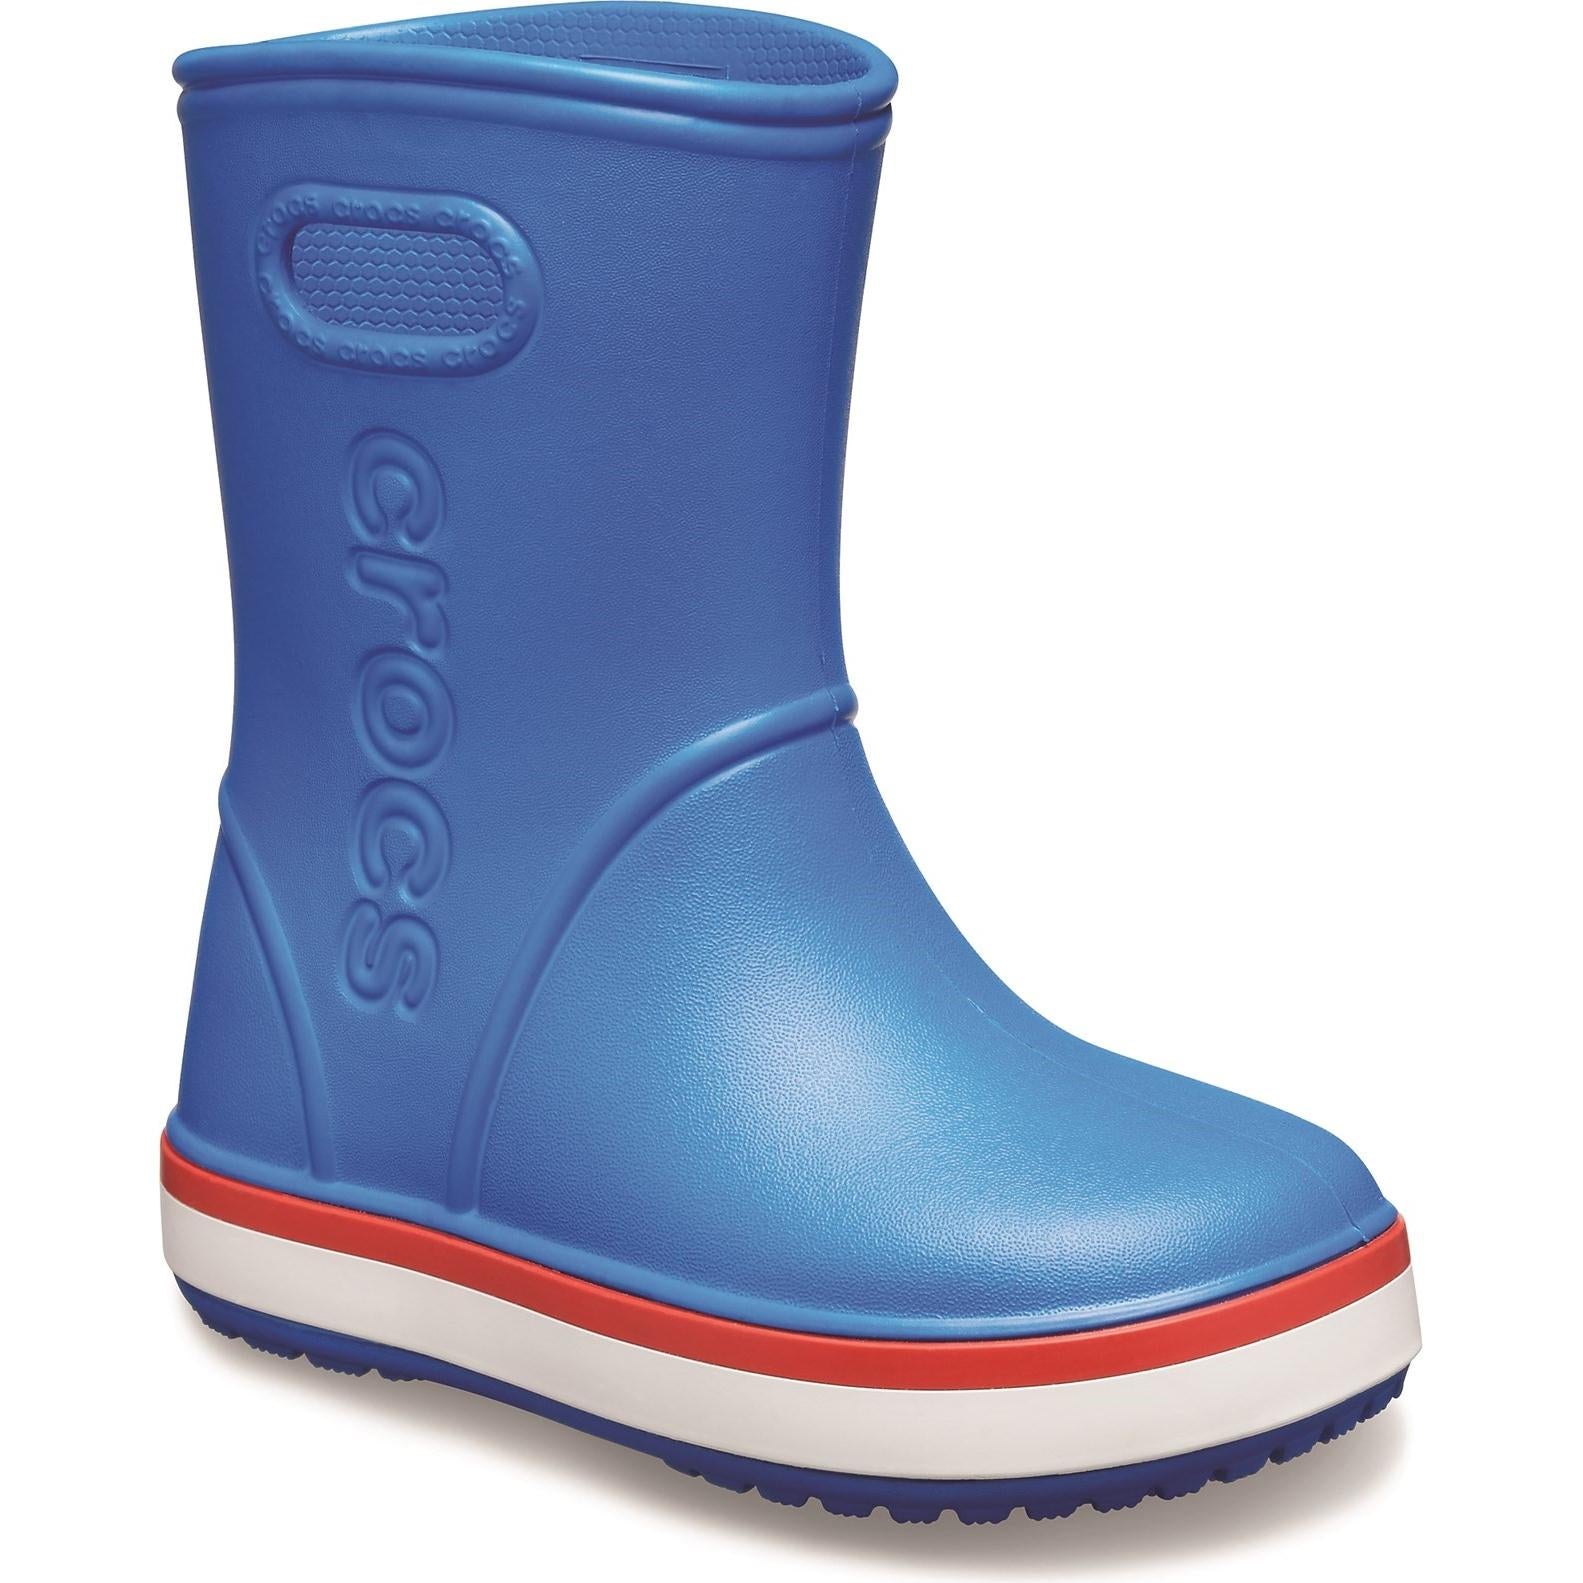 Crocs Crocband Rainboot Pull On Wellington Shoes